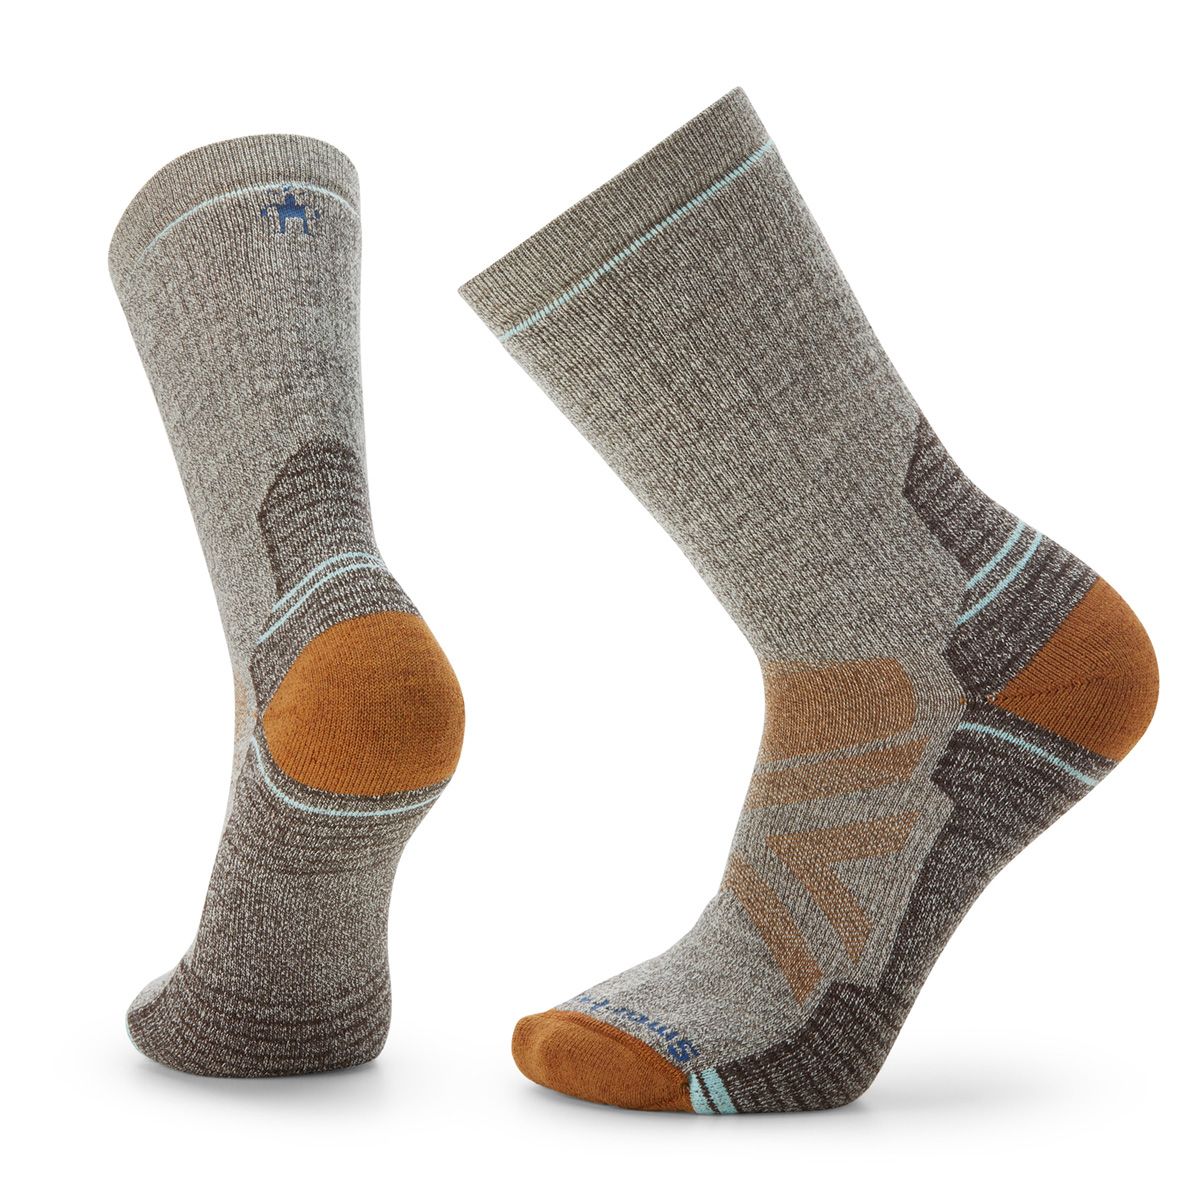 Are Merino wool hiking socks worth the investment?